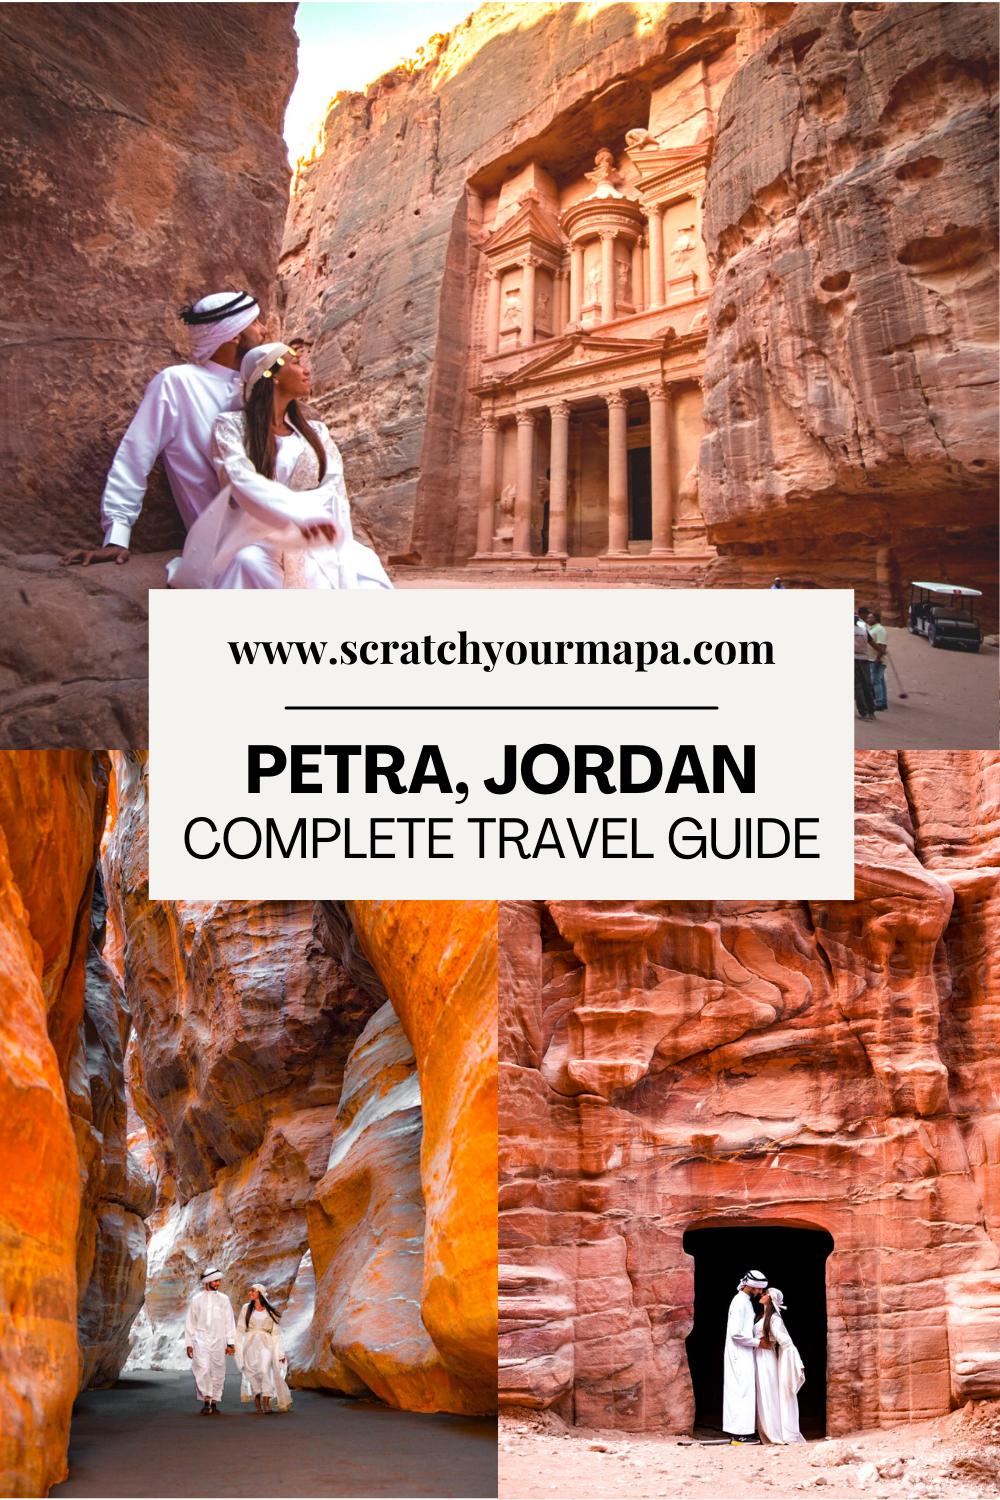 The treasury in Petra Pin